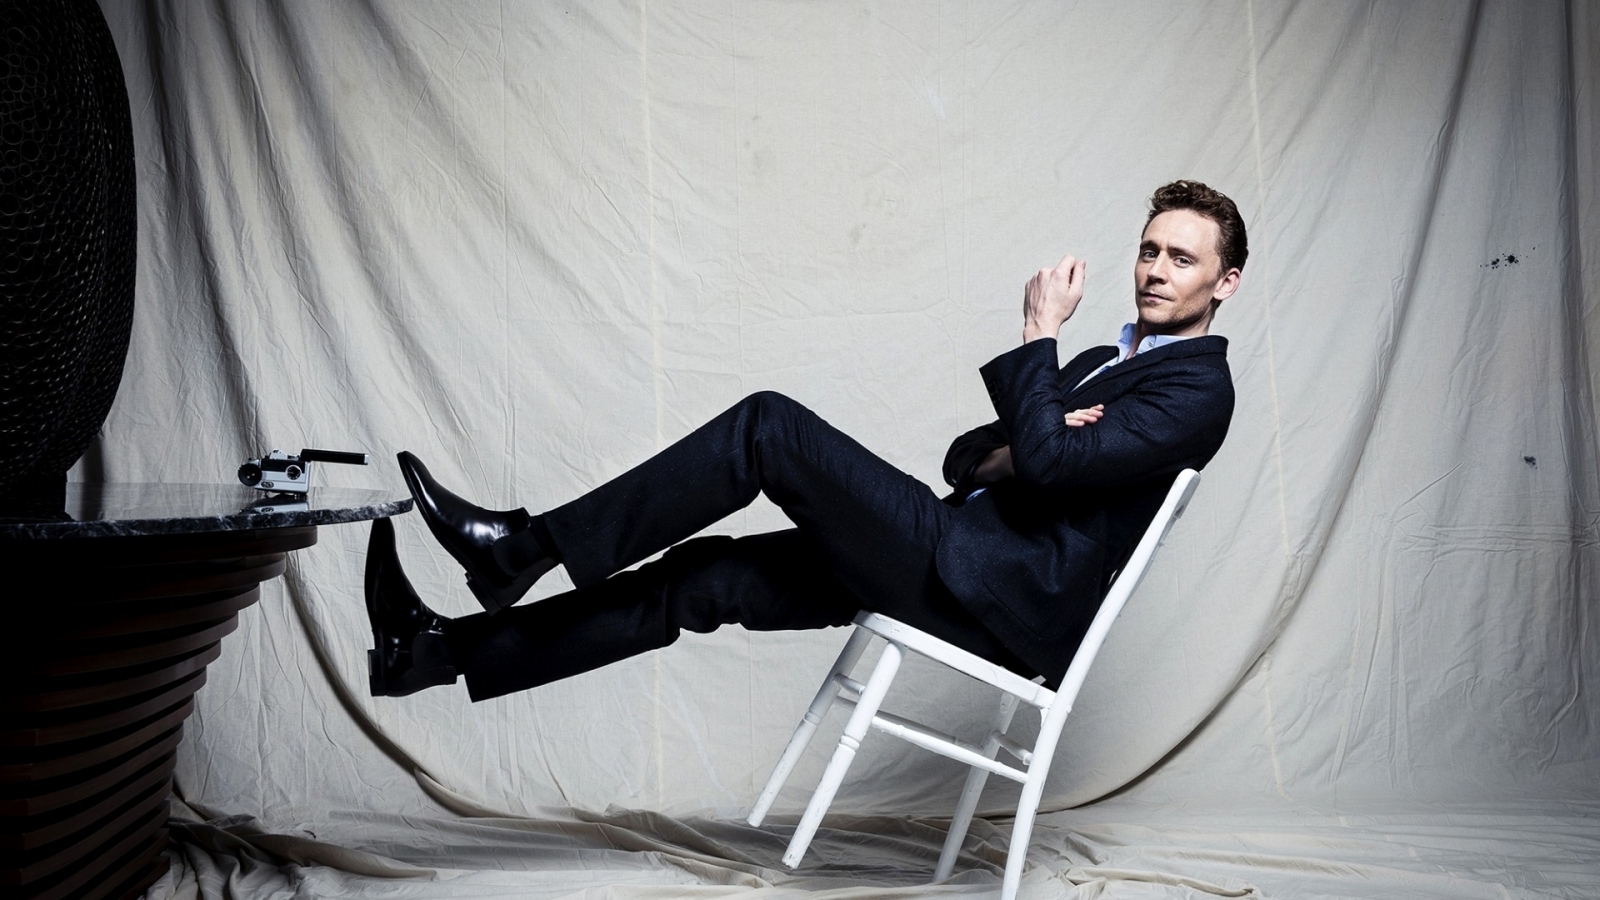 Tom Hiddleston Photo Session for 1600 x 900 HDTV resolution